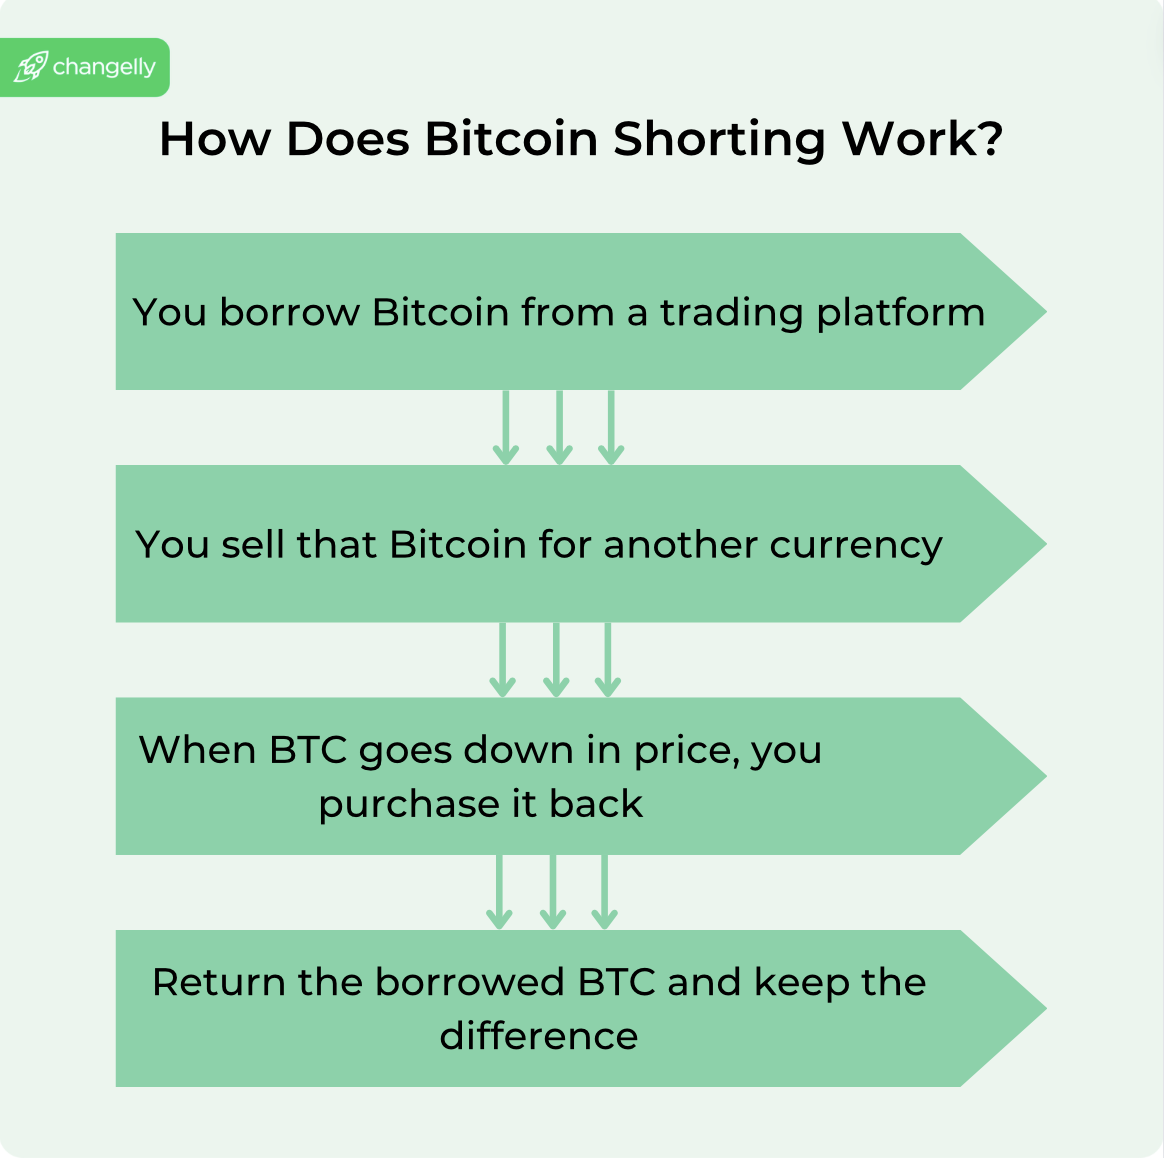 How to short Bitcoin